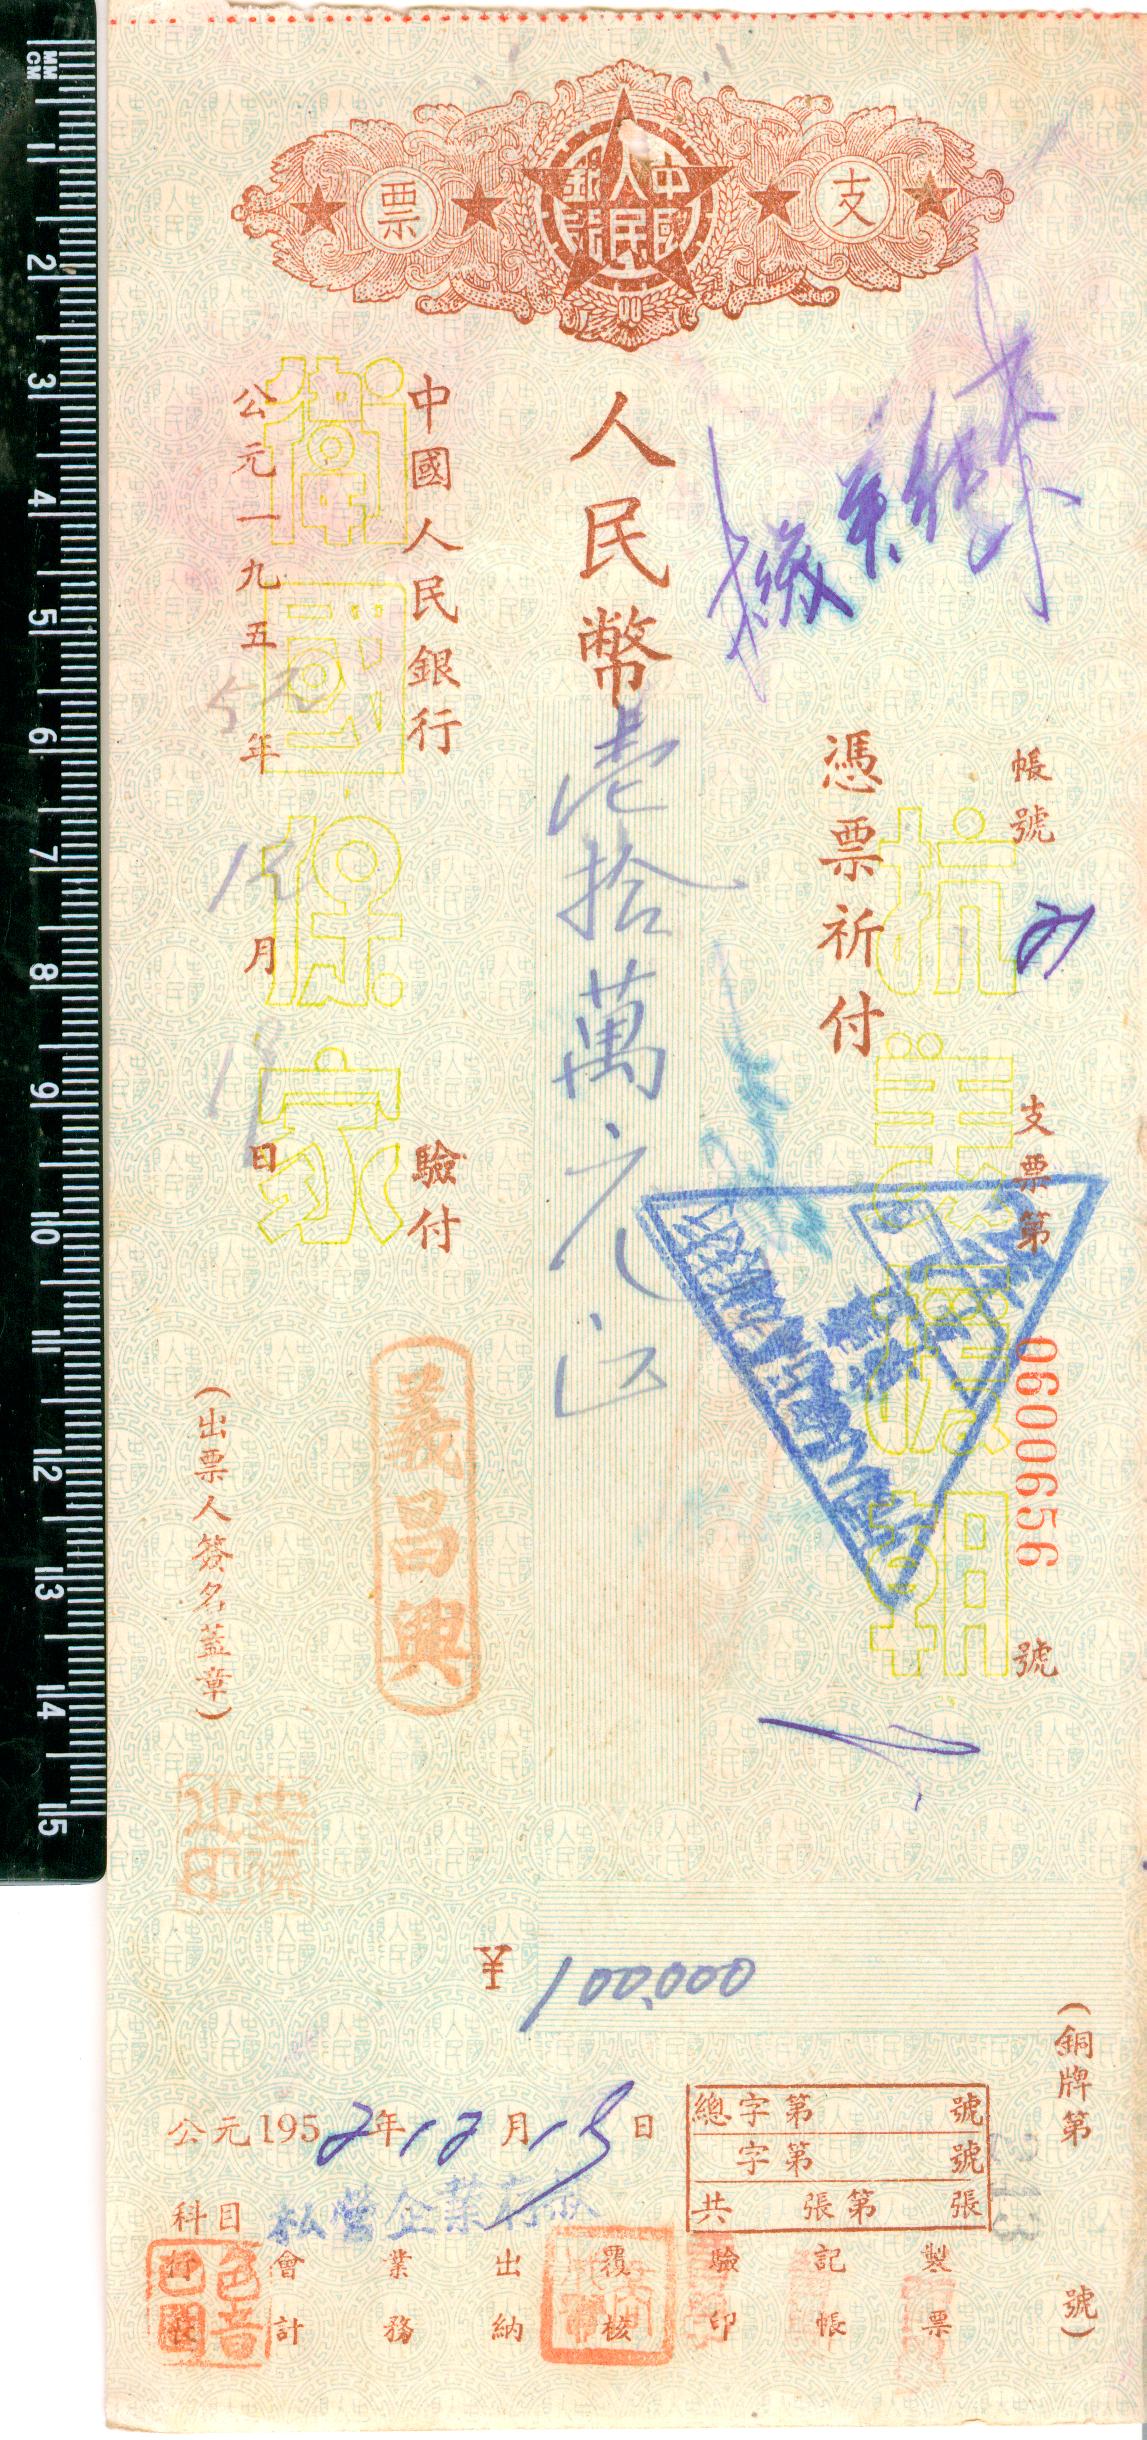 D1110, China's "Korean War, Anti USA" Check, 100,000 Dollars, 1952 Cheque